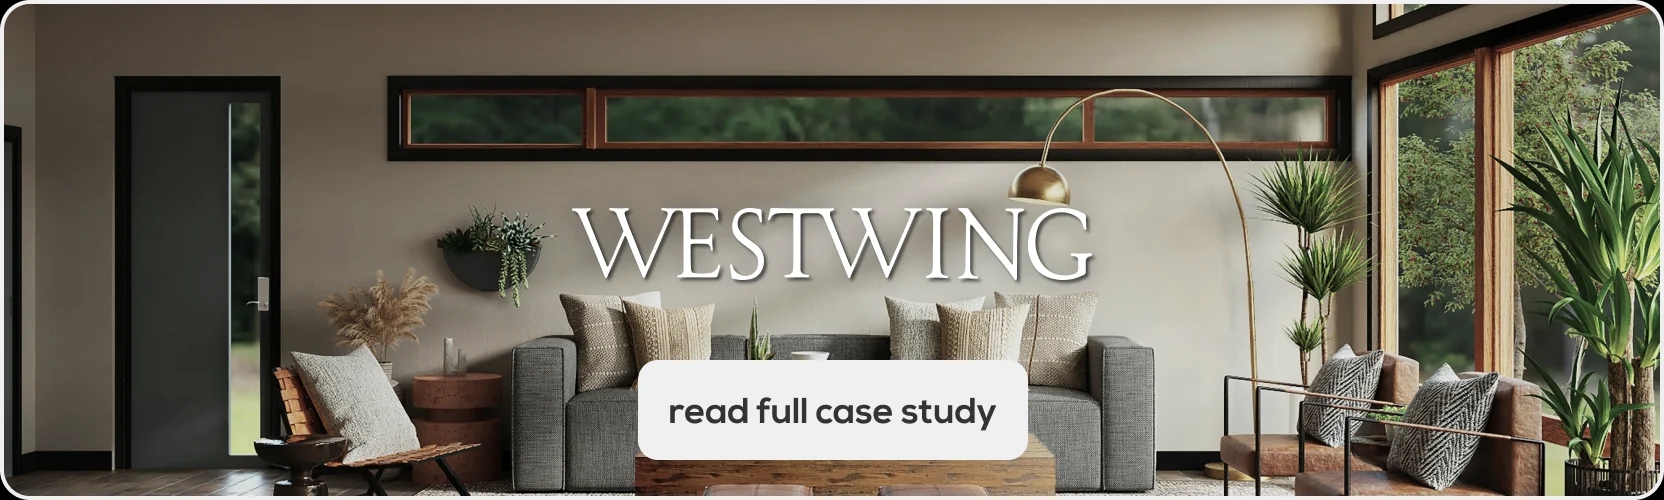 E-commerce platform development for Westwing | case study